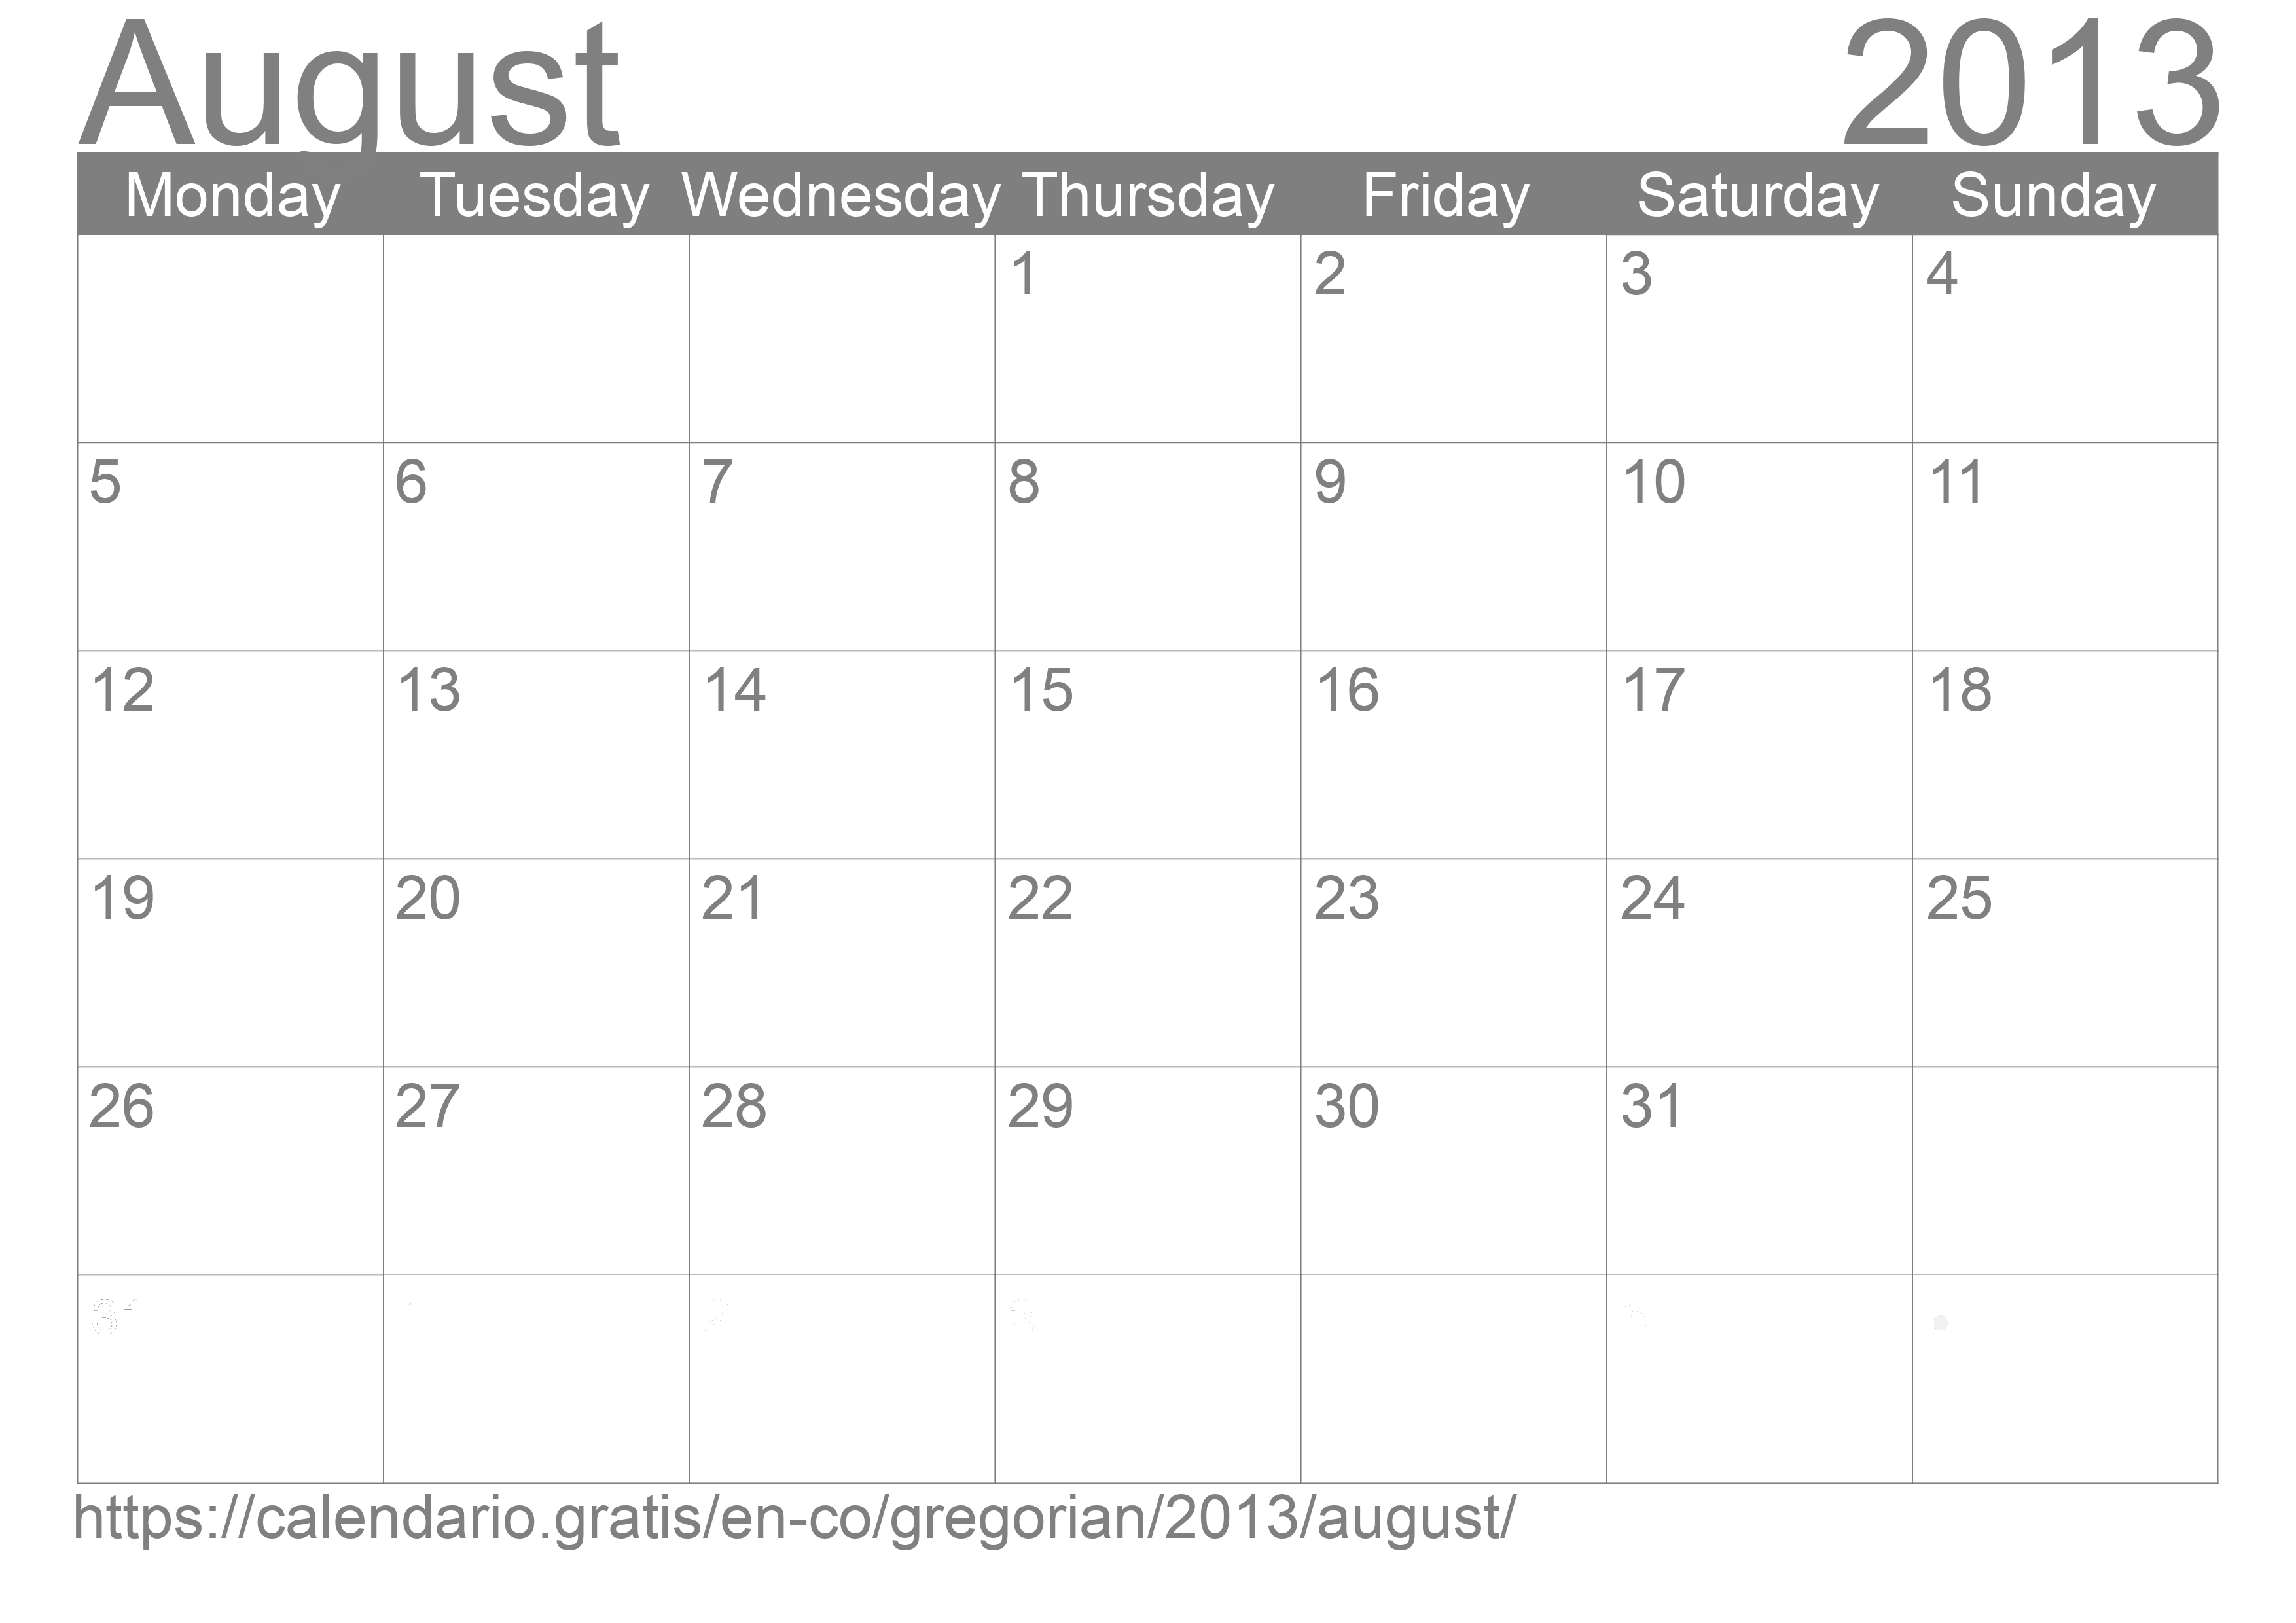 Calendar August 2013 to print